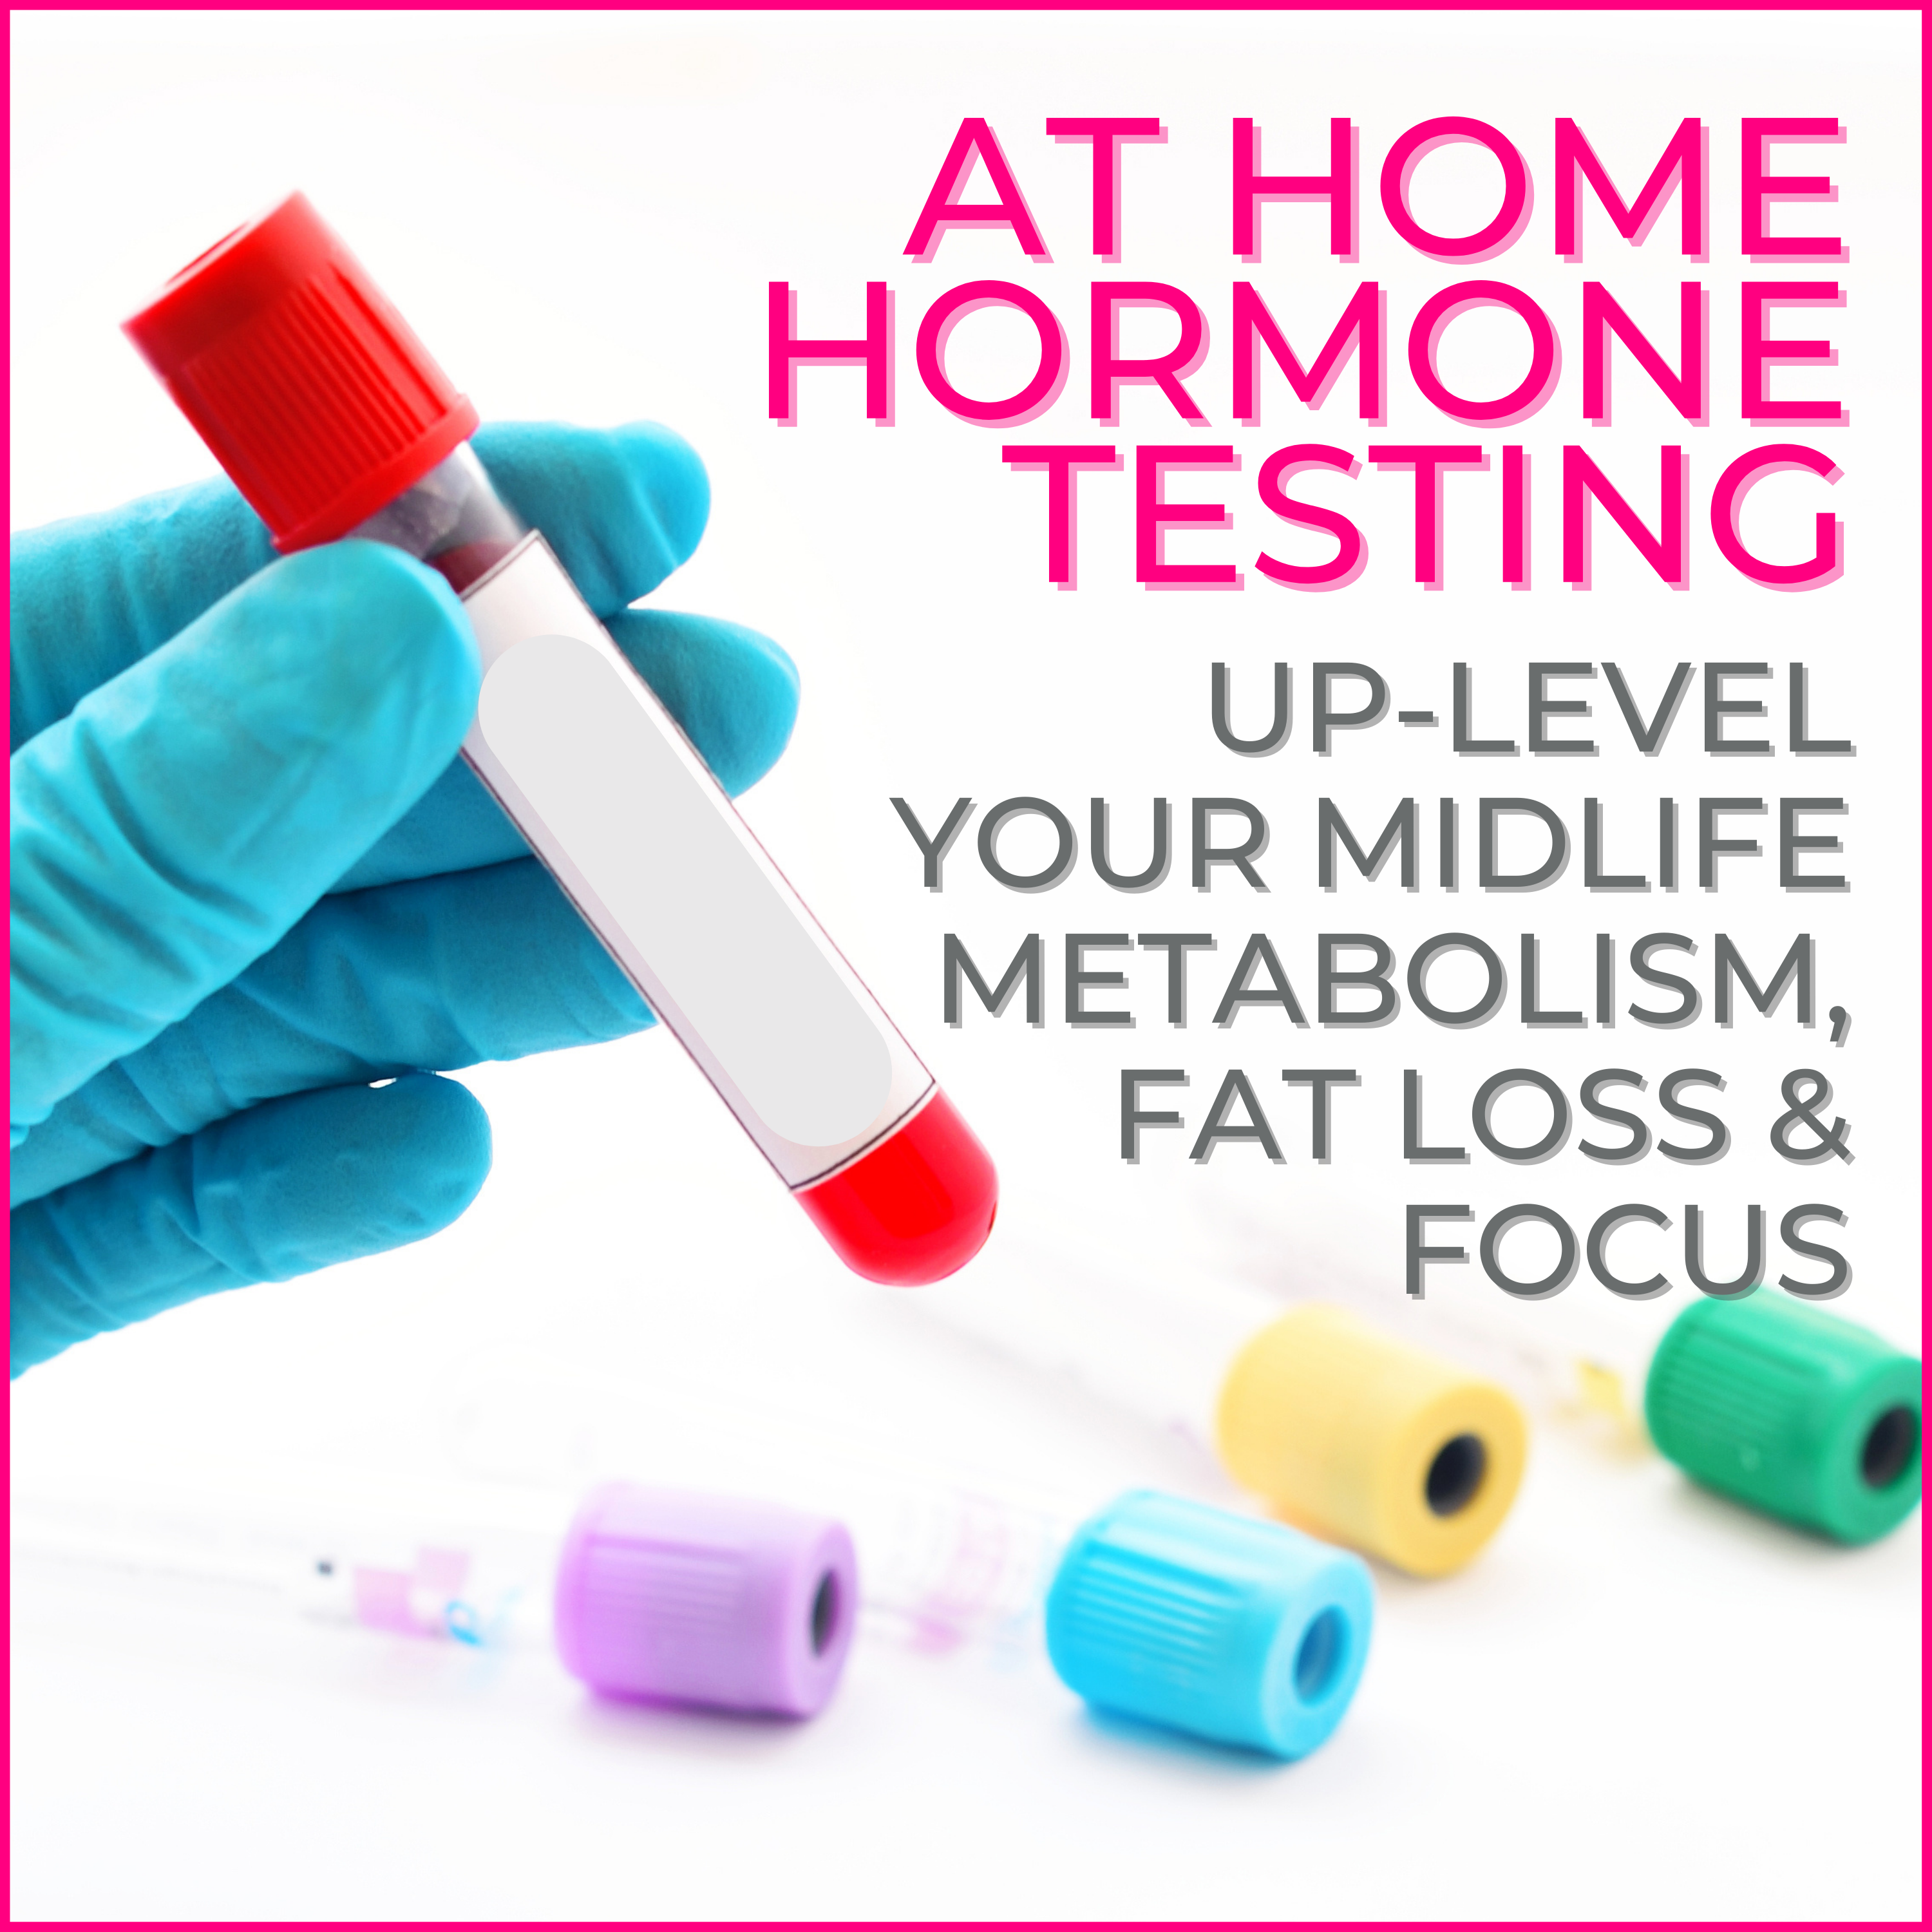 natalie jill marek health hormone testing kit at home midlife hormone testing